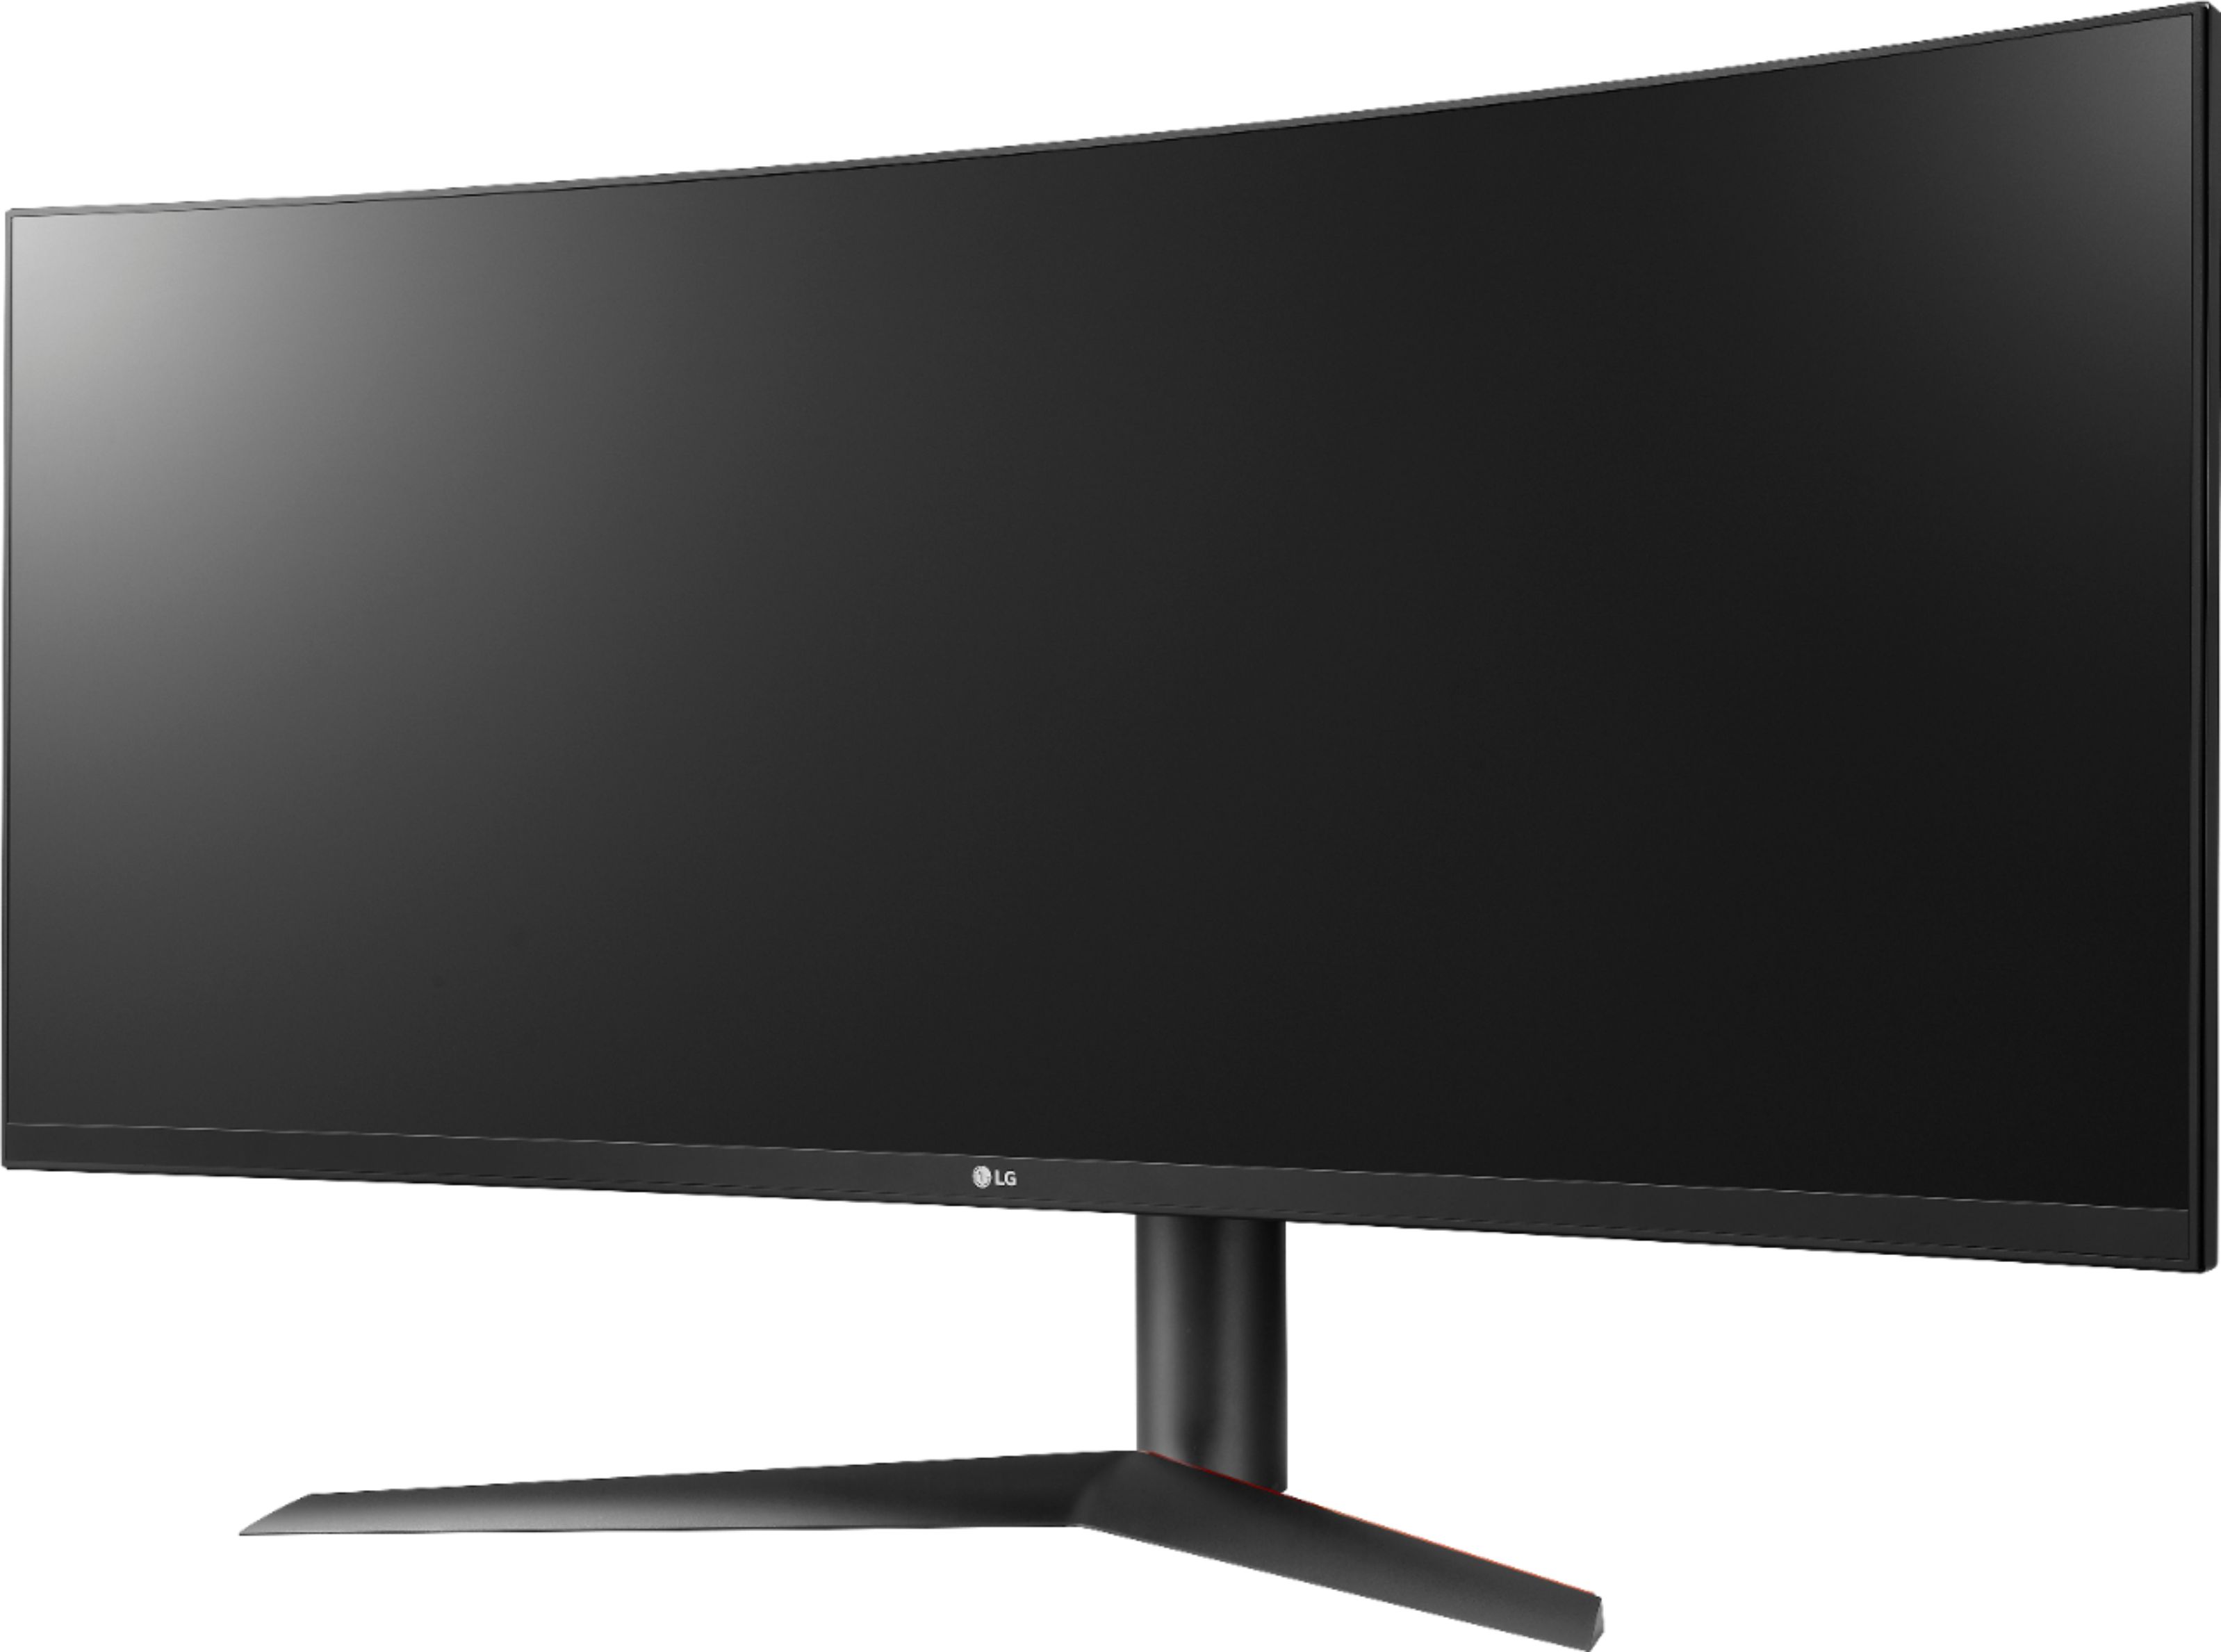 Left View: ASUS - VG248QG 24" Widescreen LCD ELMB Sync, Adaptive-Sync snd FreeSync Compatible FHD Gaming Monitor (DisplayPort, HDMI) - Black